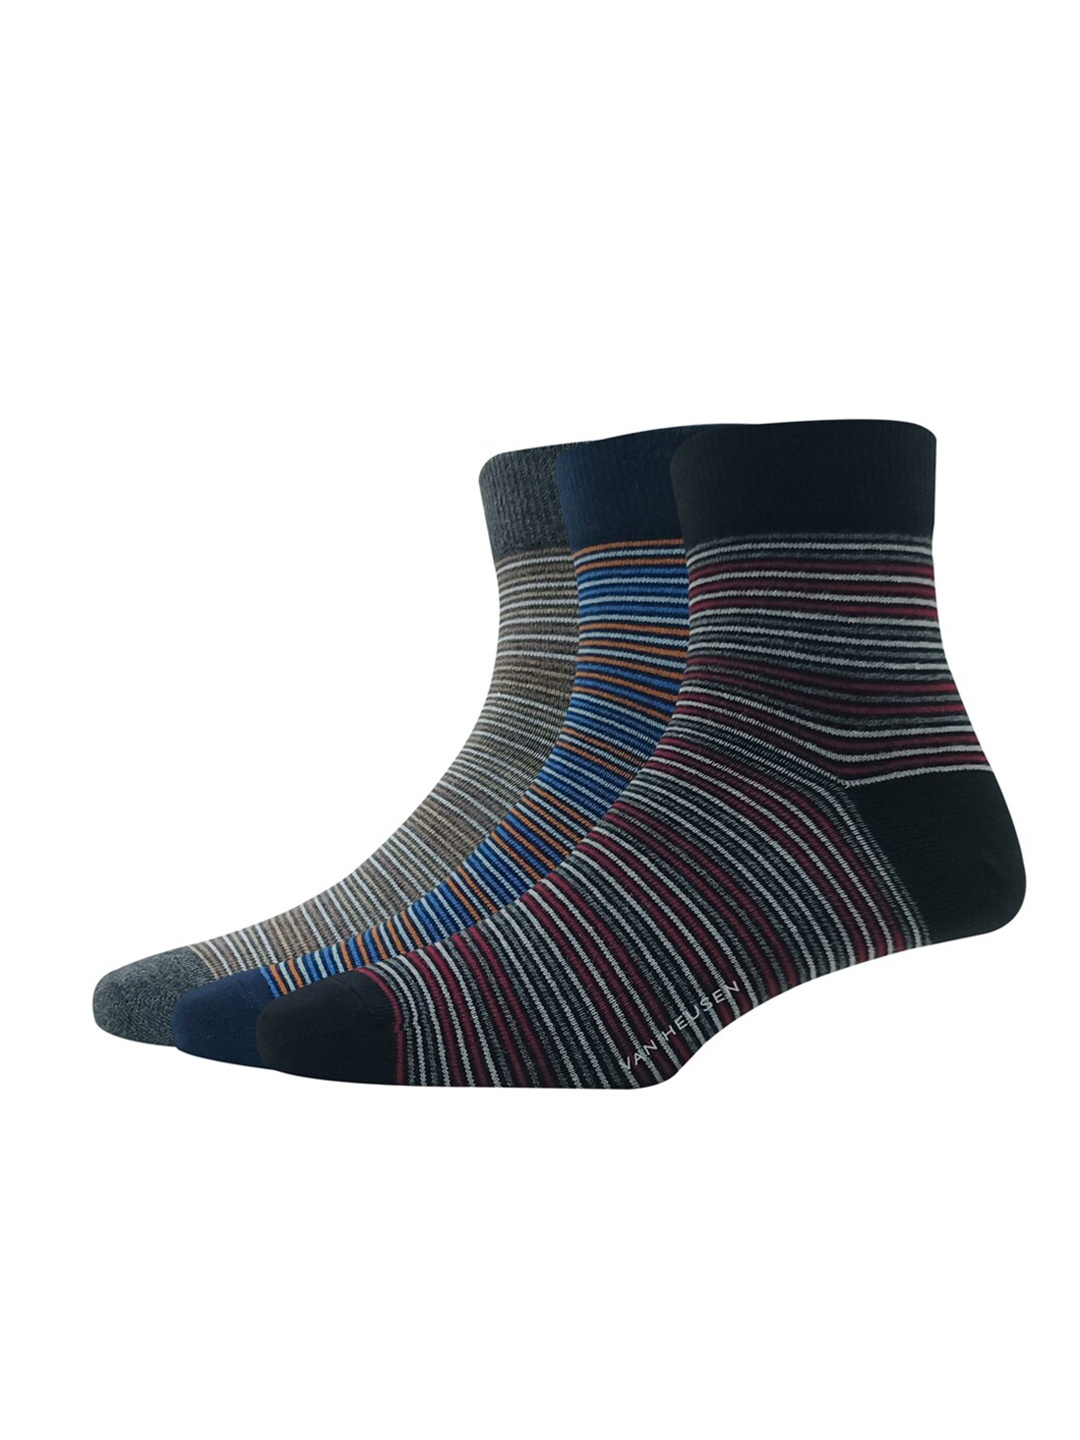 

Van Heusen Men Pack Of 3 Patterned Above Ankle Length Socks, Black